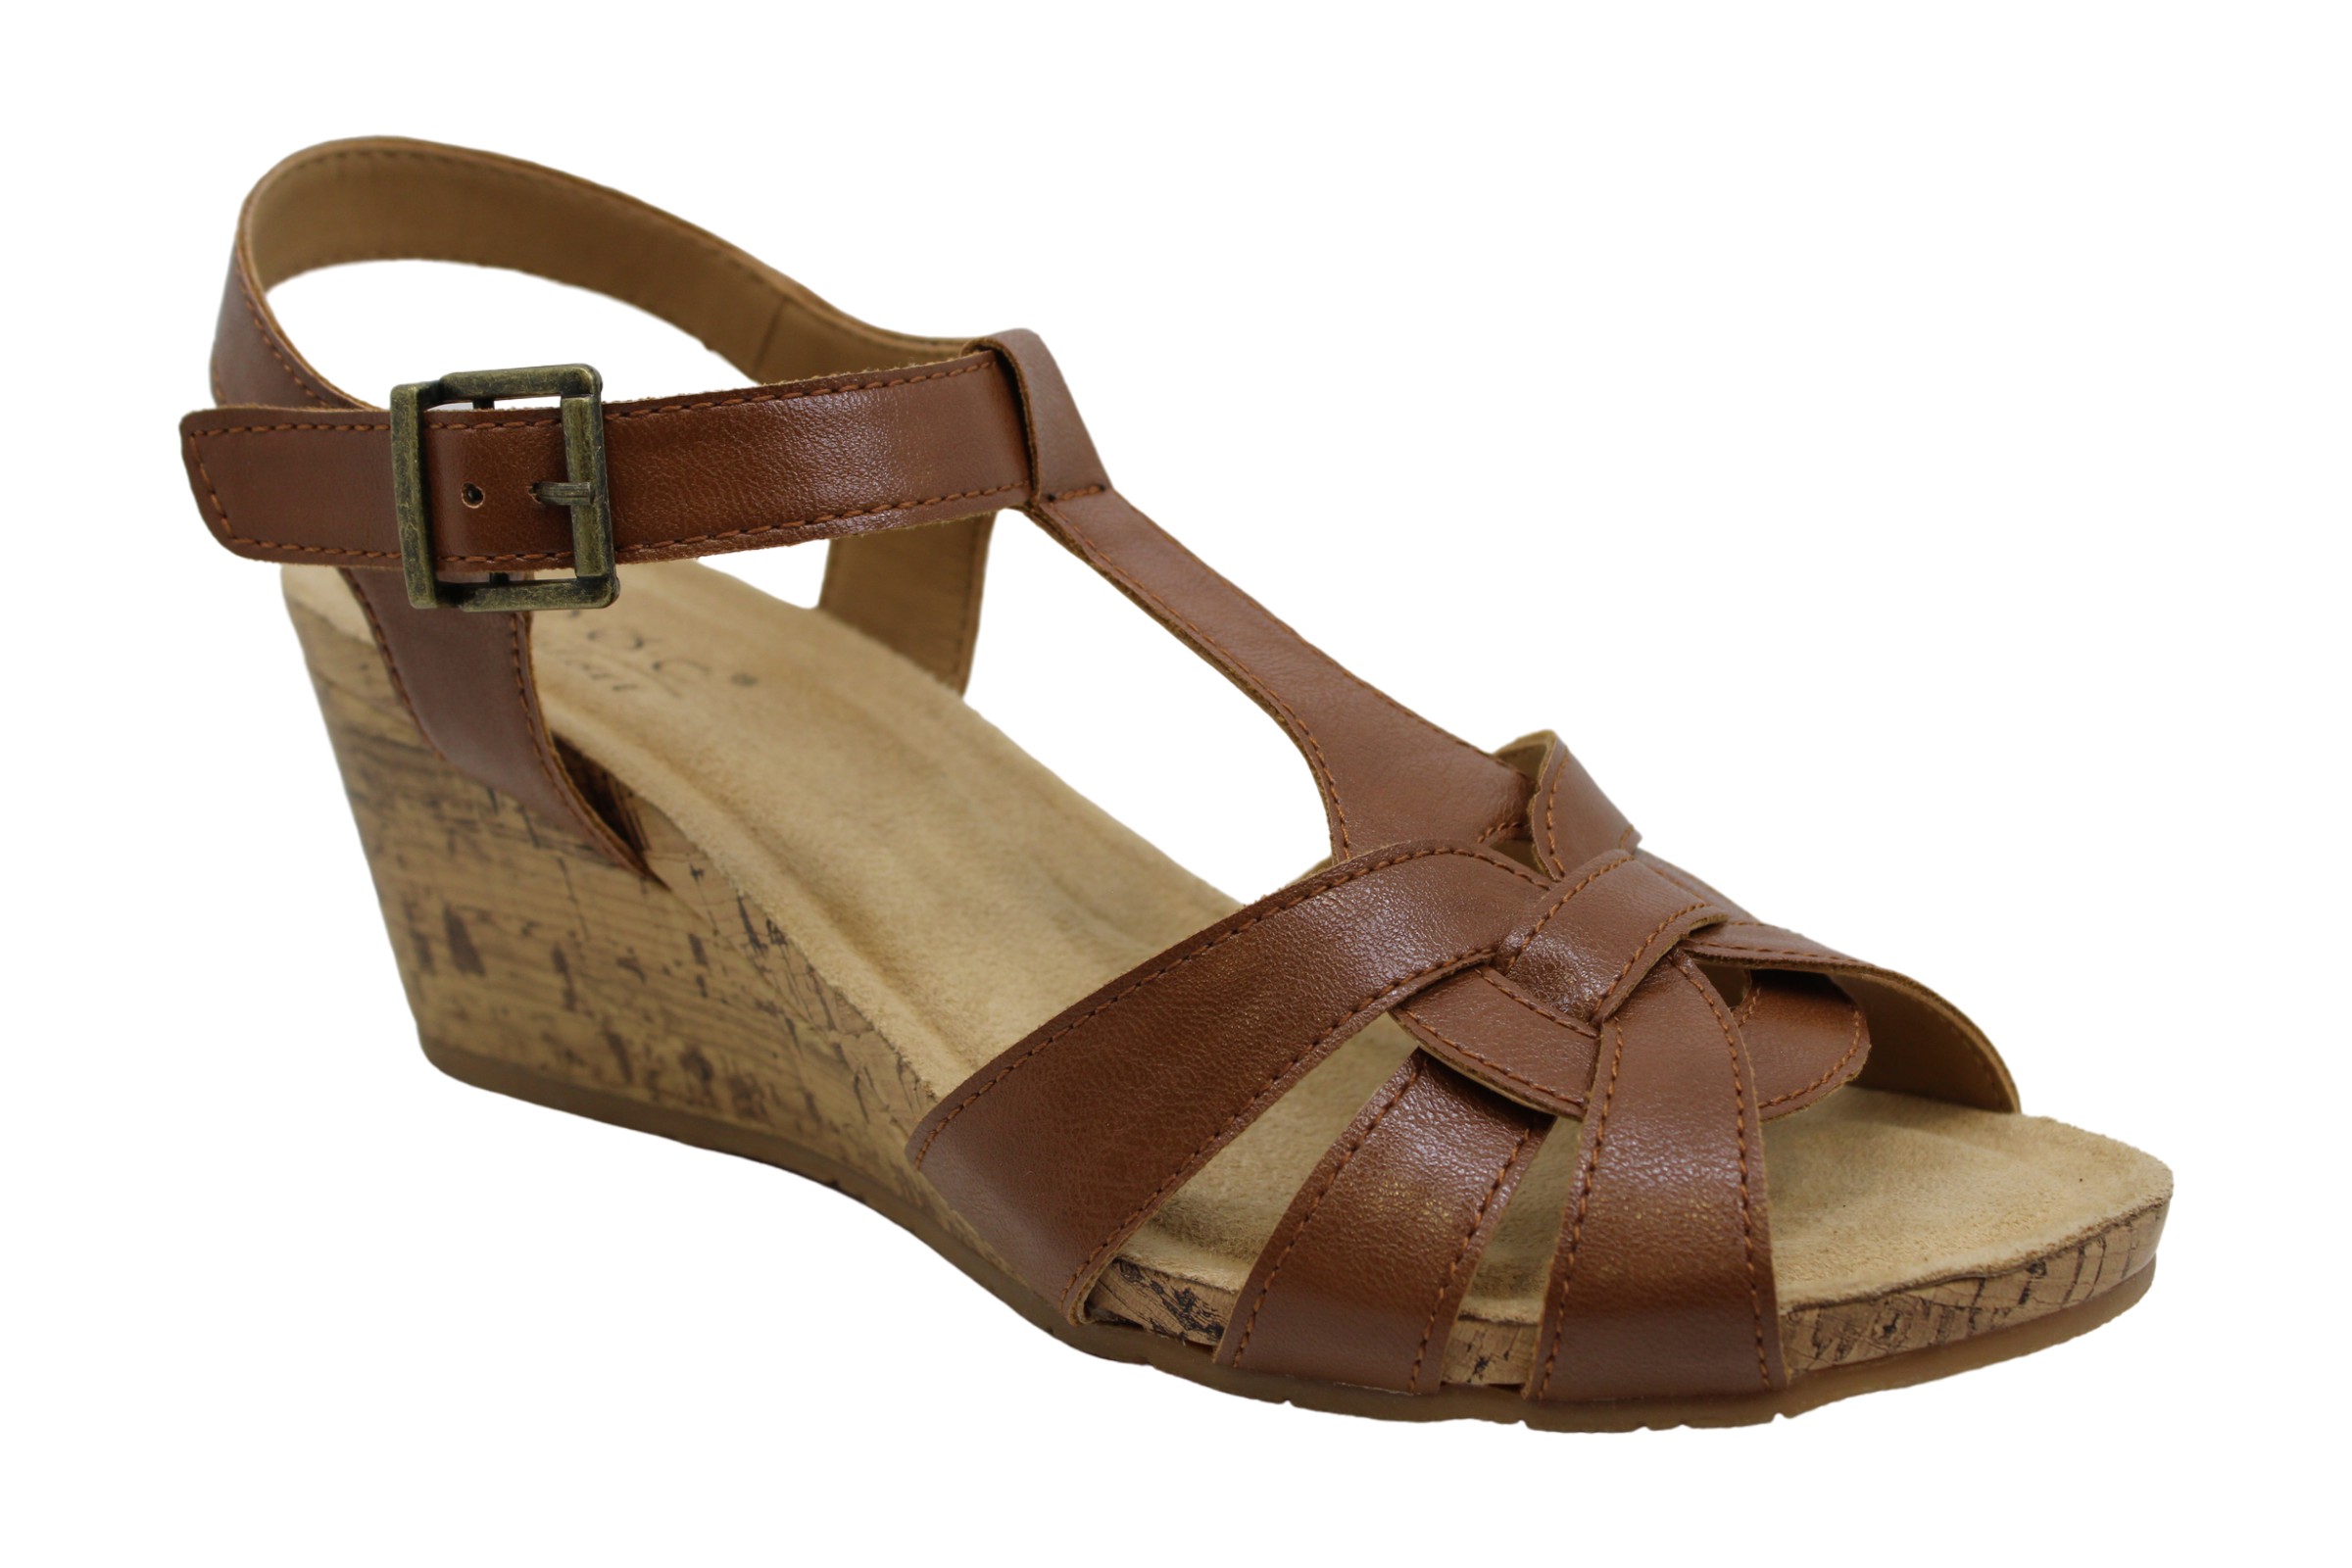 Women's BOC, Jaquet Wedge Sandal, Light Brown, Size 8.0 BpX3 | eBay